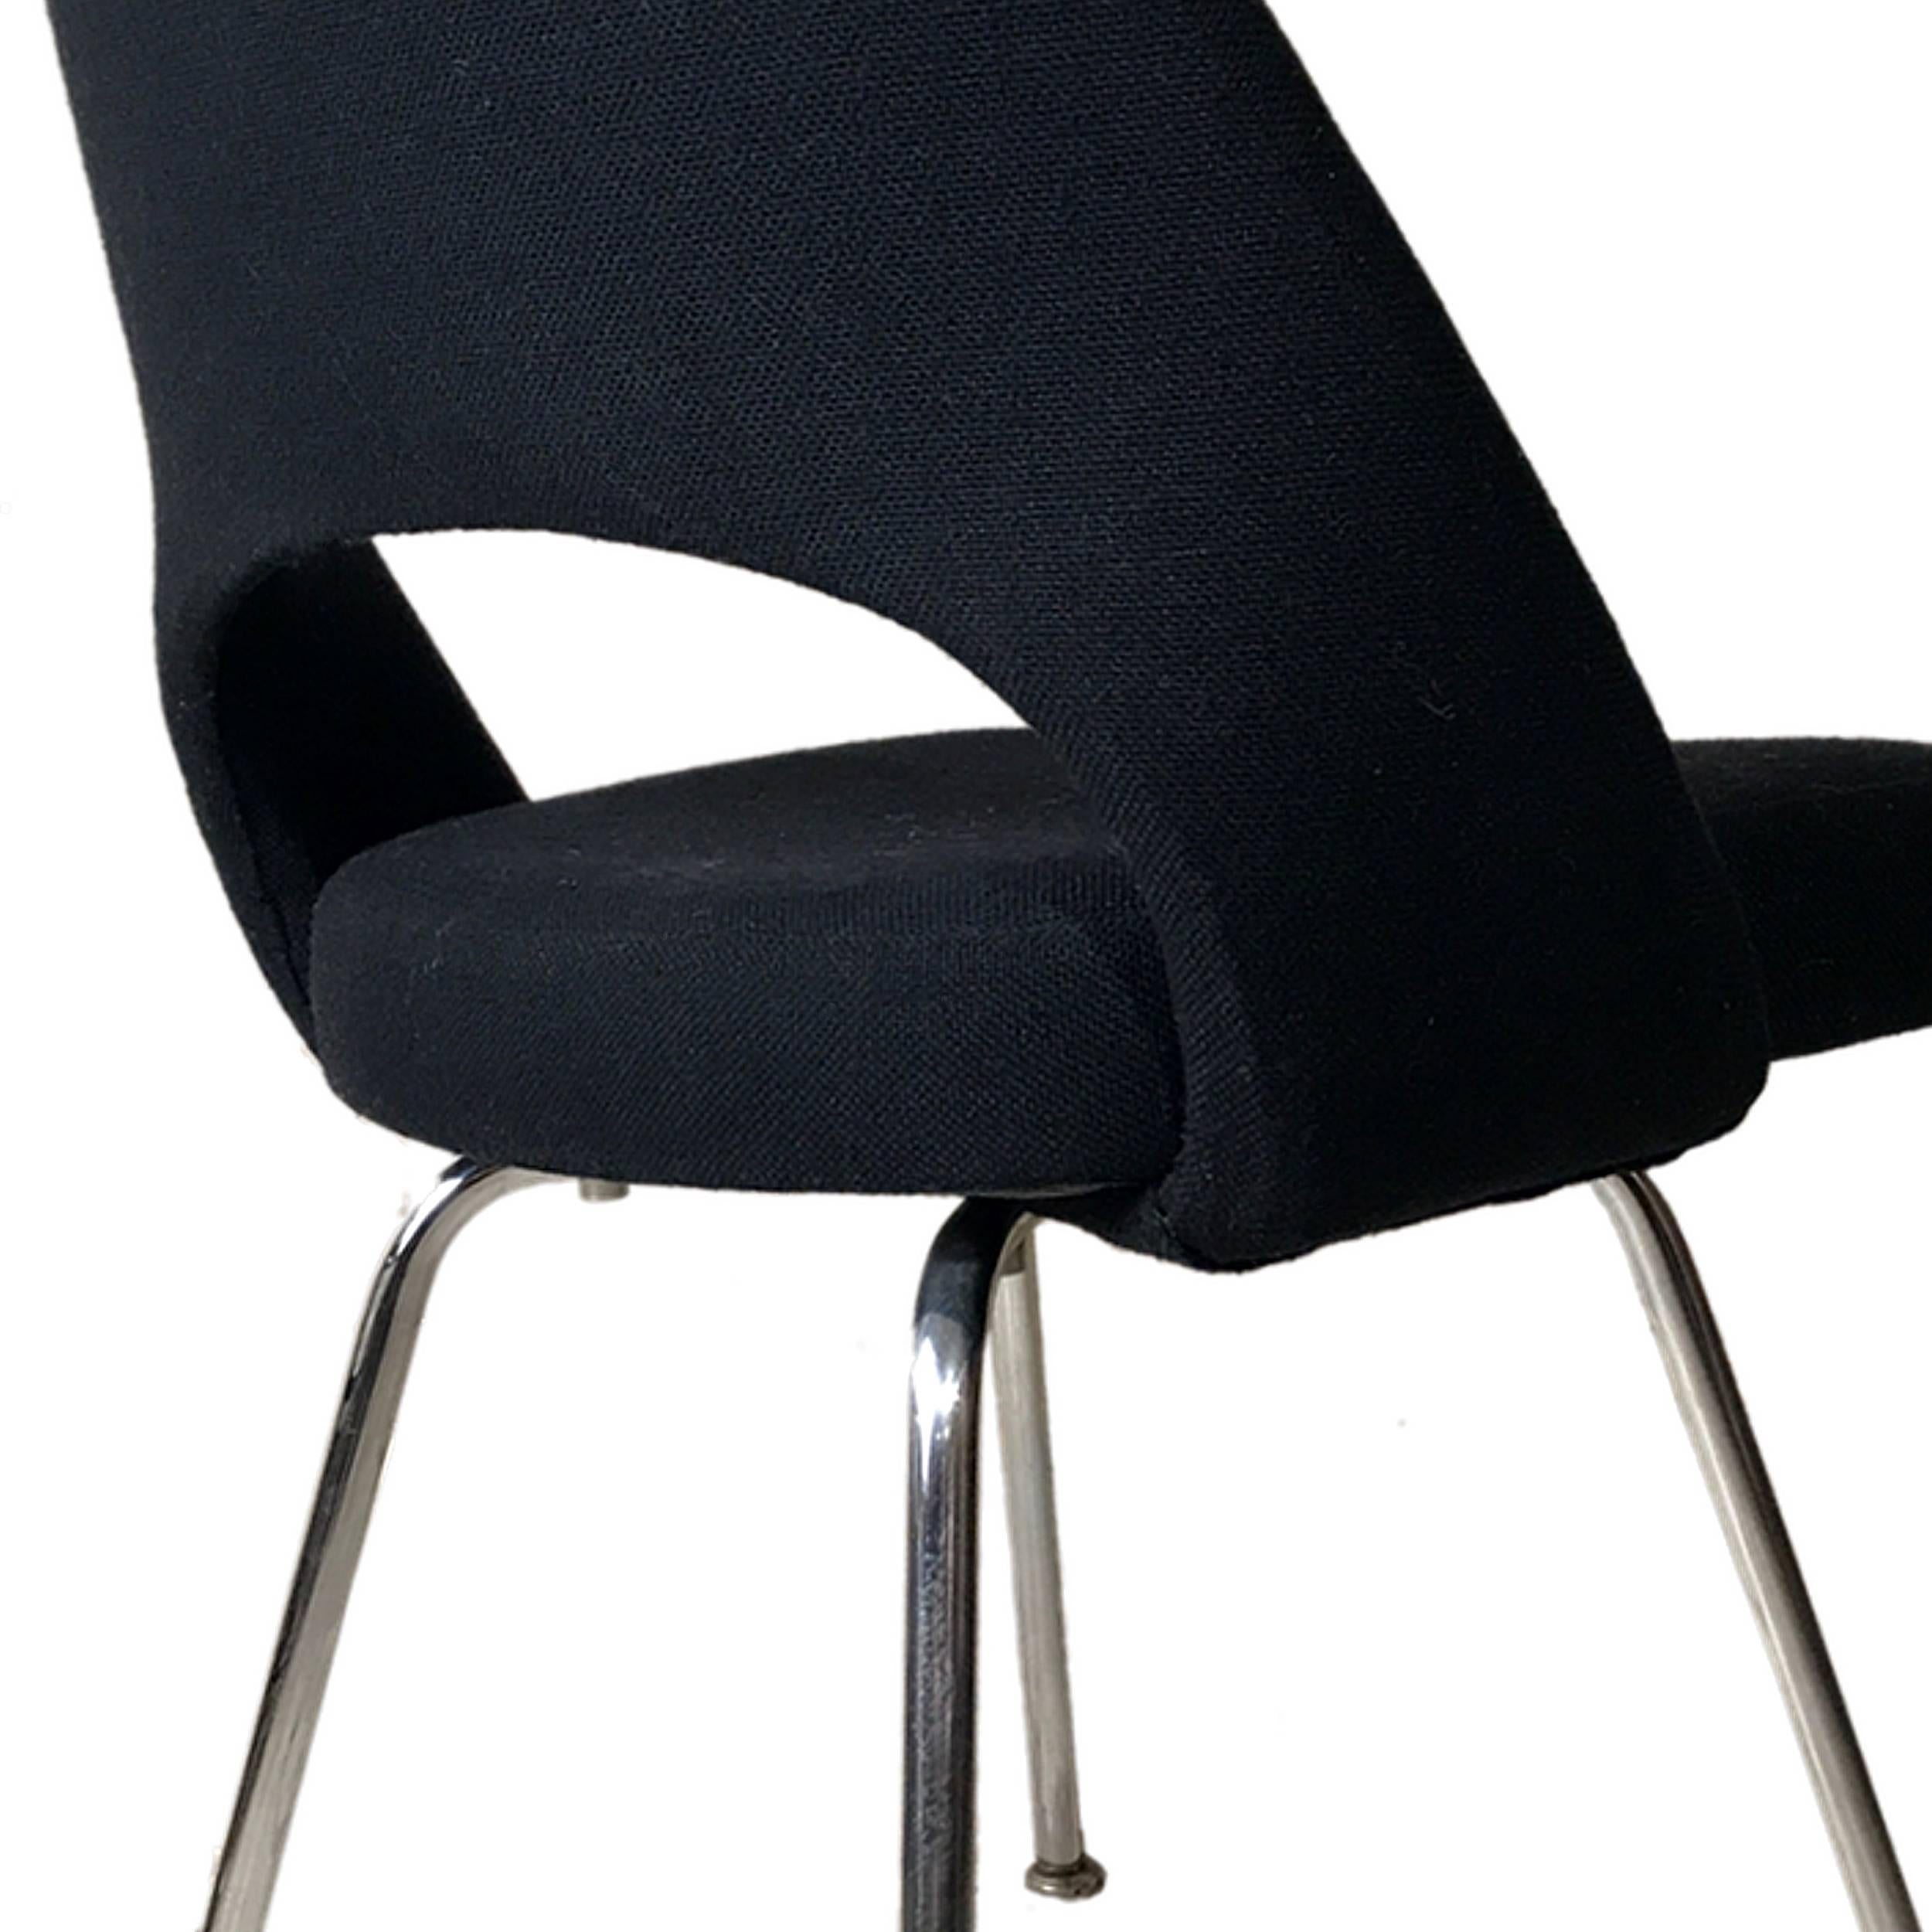 Mid-Century Modern Eero Saarinen for Knoll Executive Side Chair in Knoll Black Upholstery